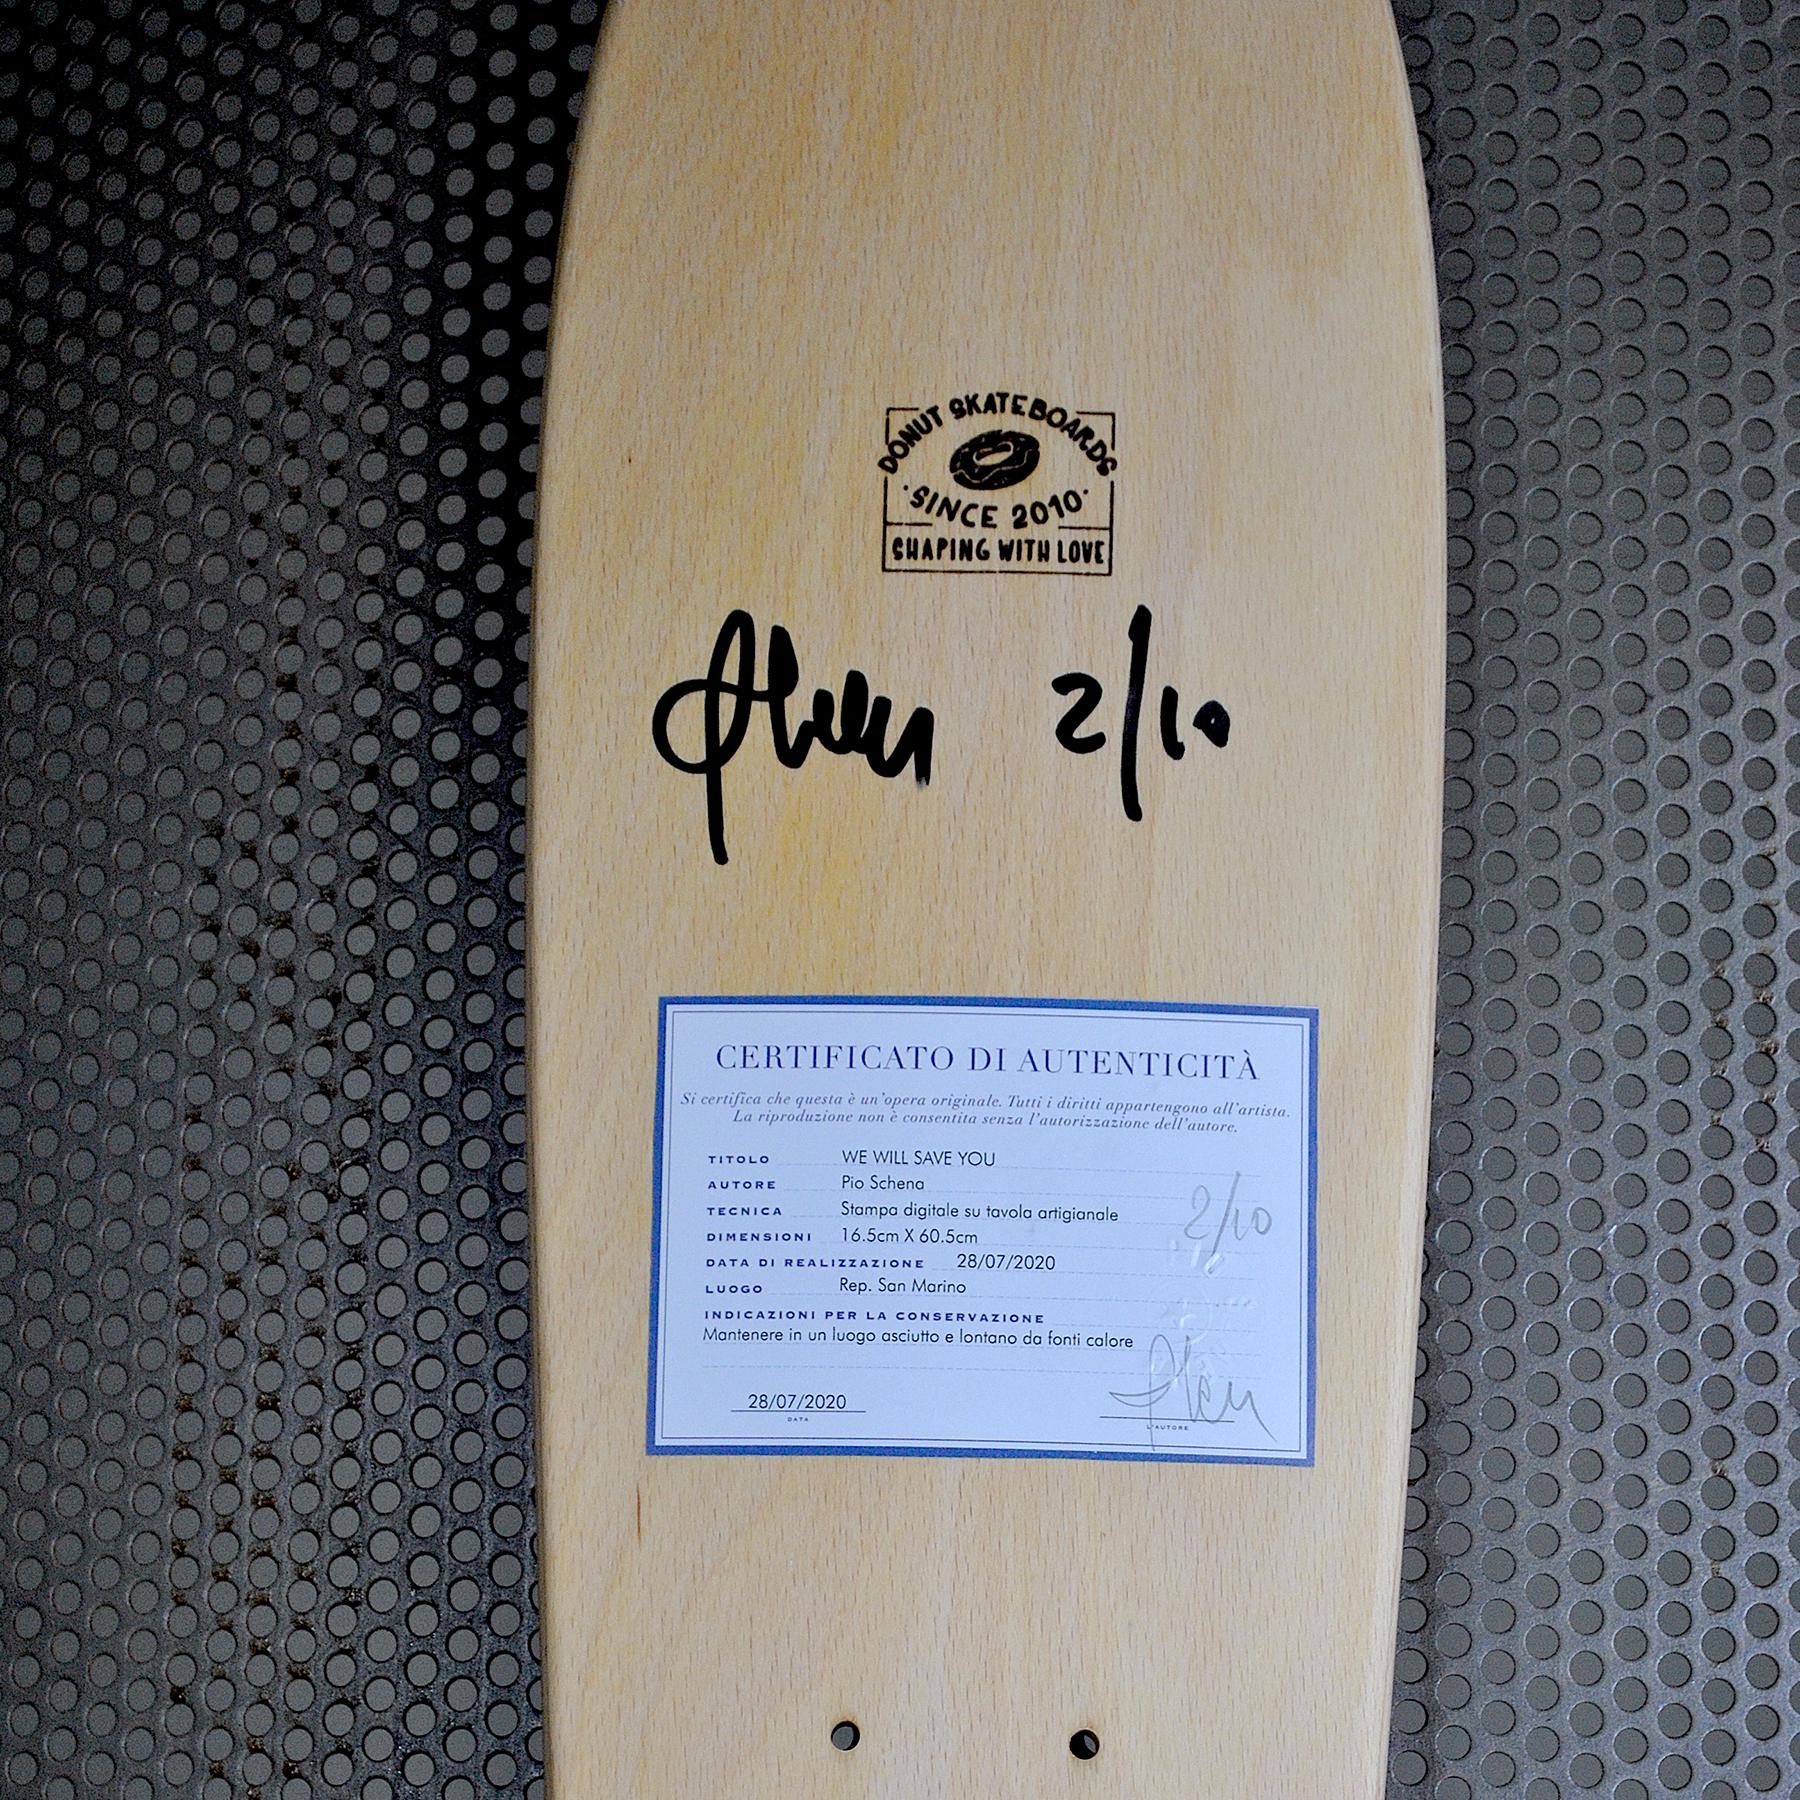 Wood Skate Deck Handmade Limited Edition by Pio Schena